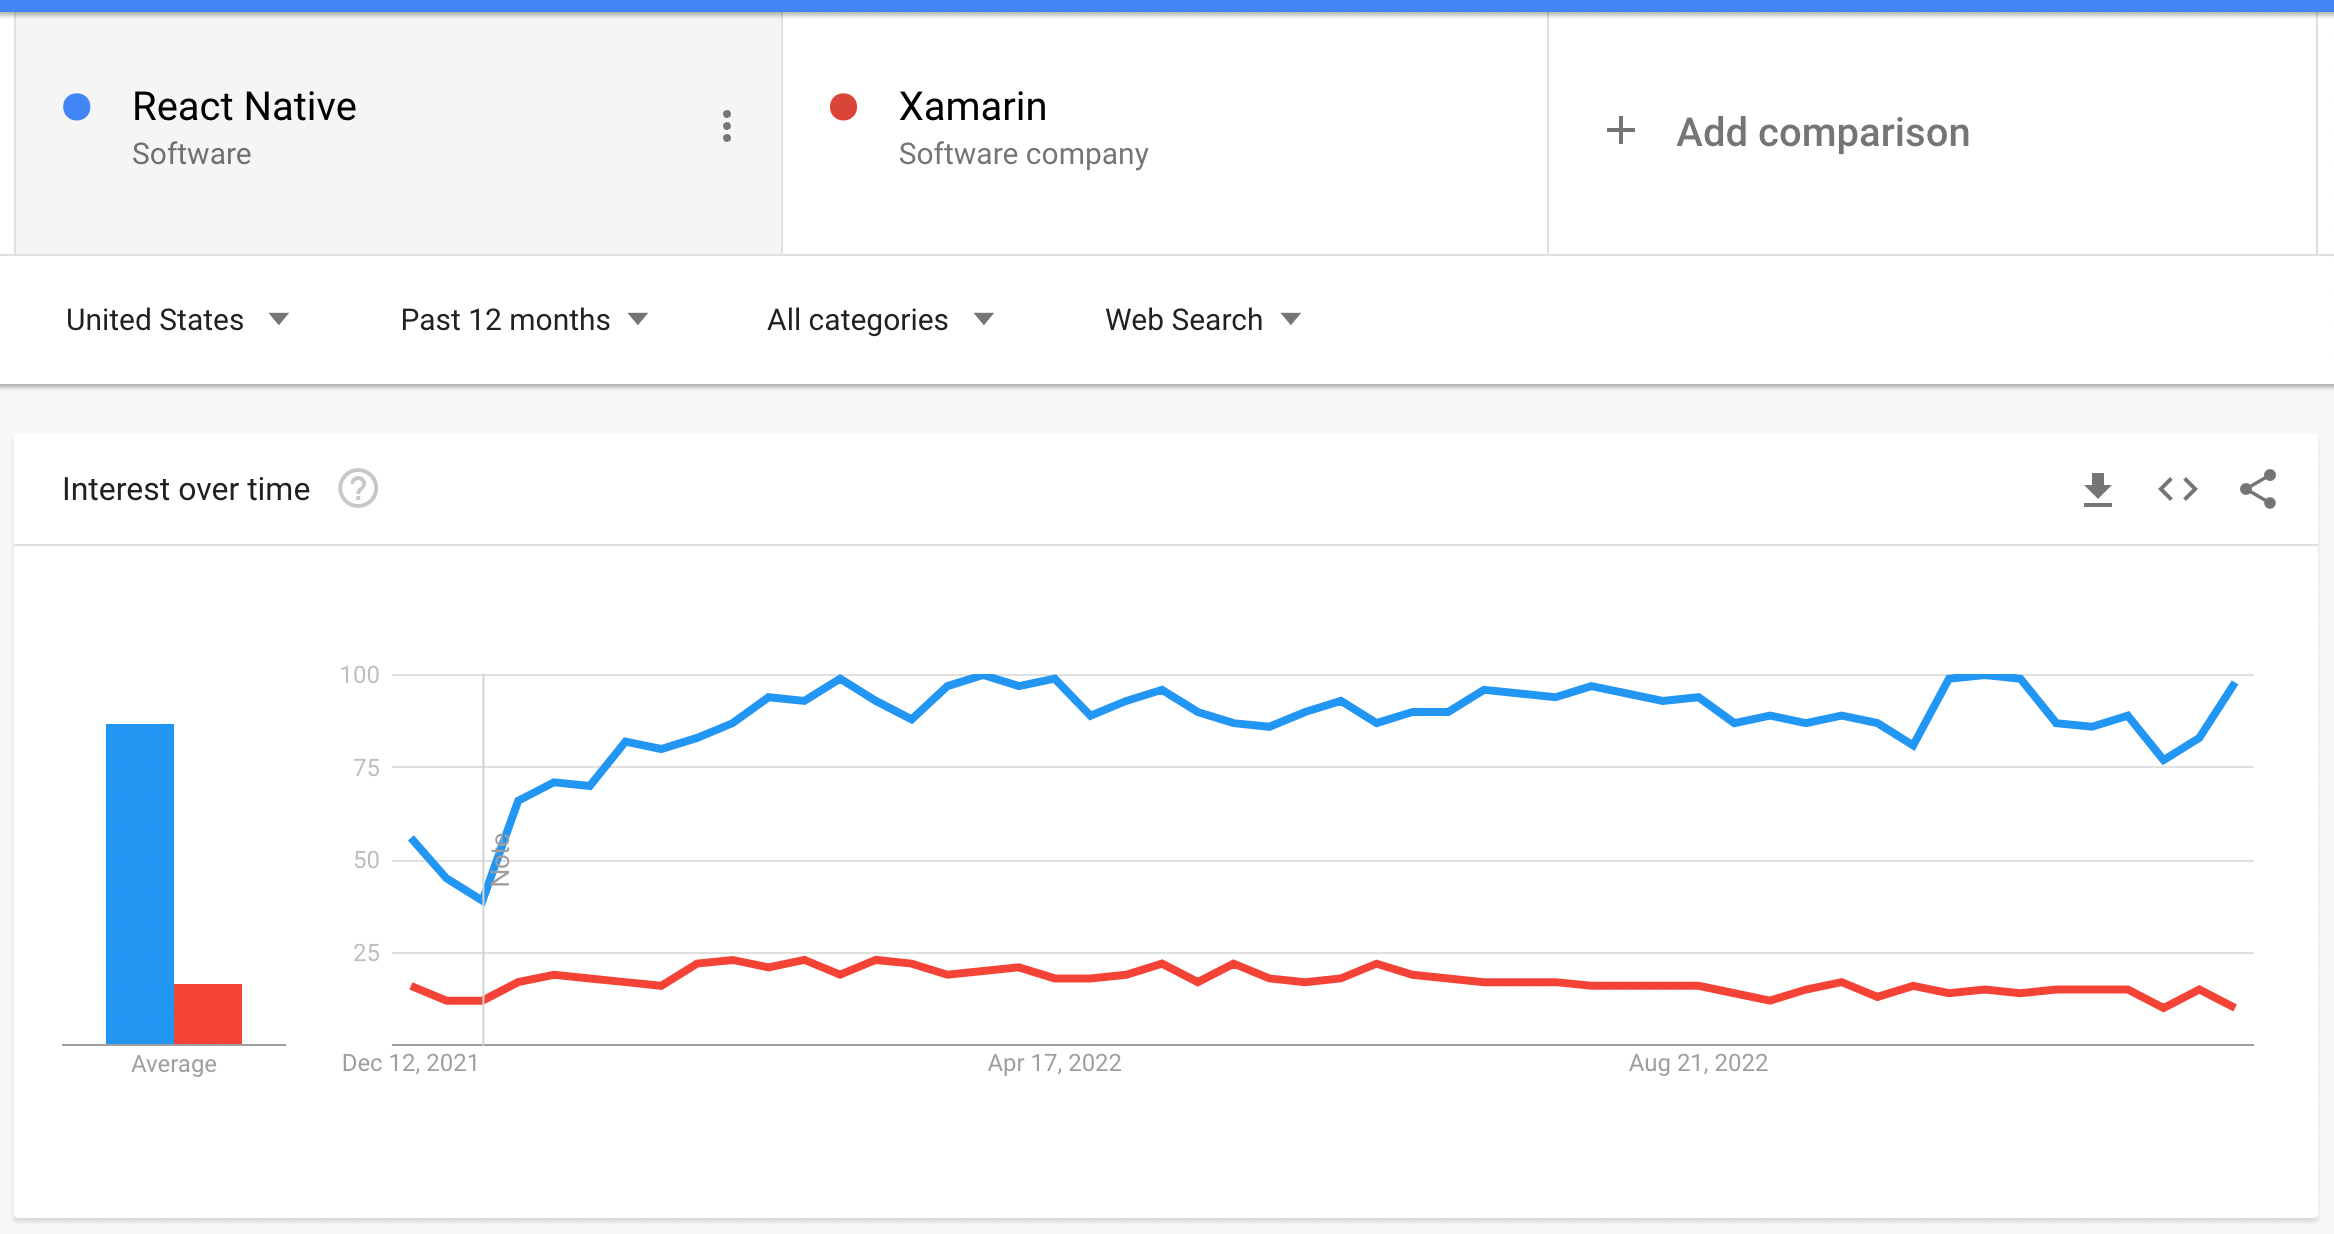 React Native vs Xamarin Trends